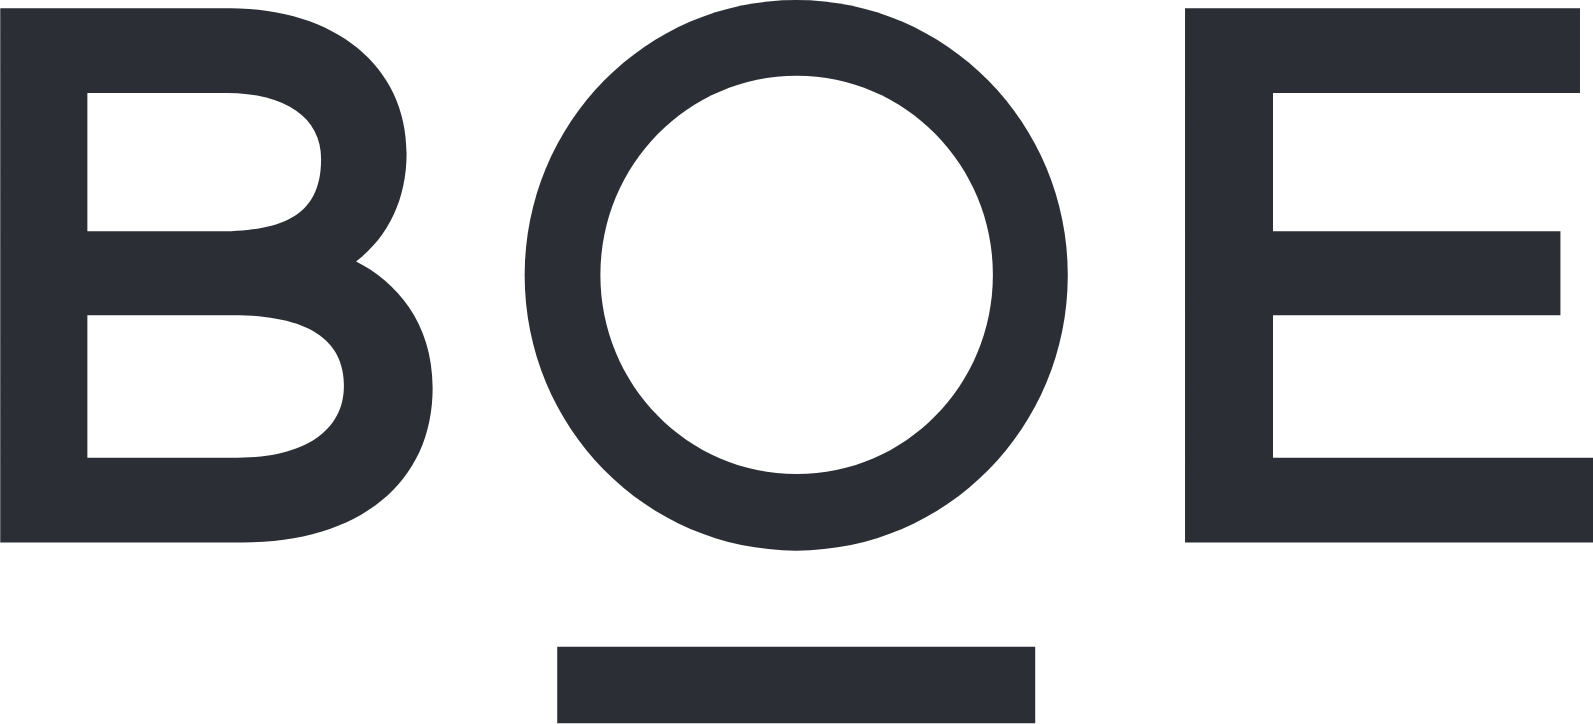 BOE Varitronix logo (transparent PNG)